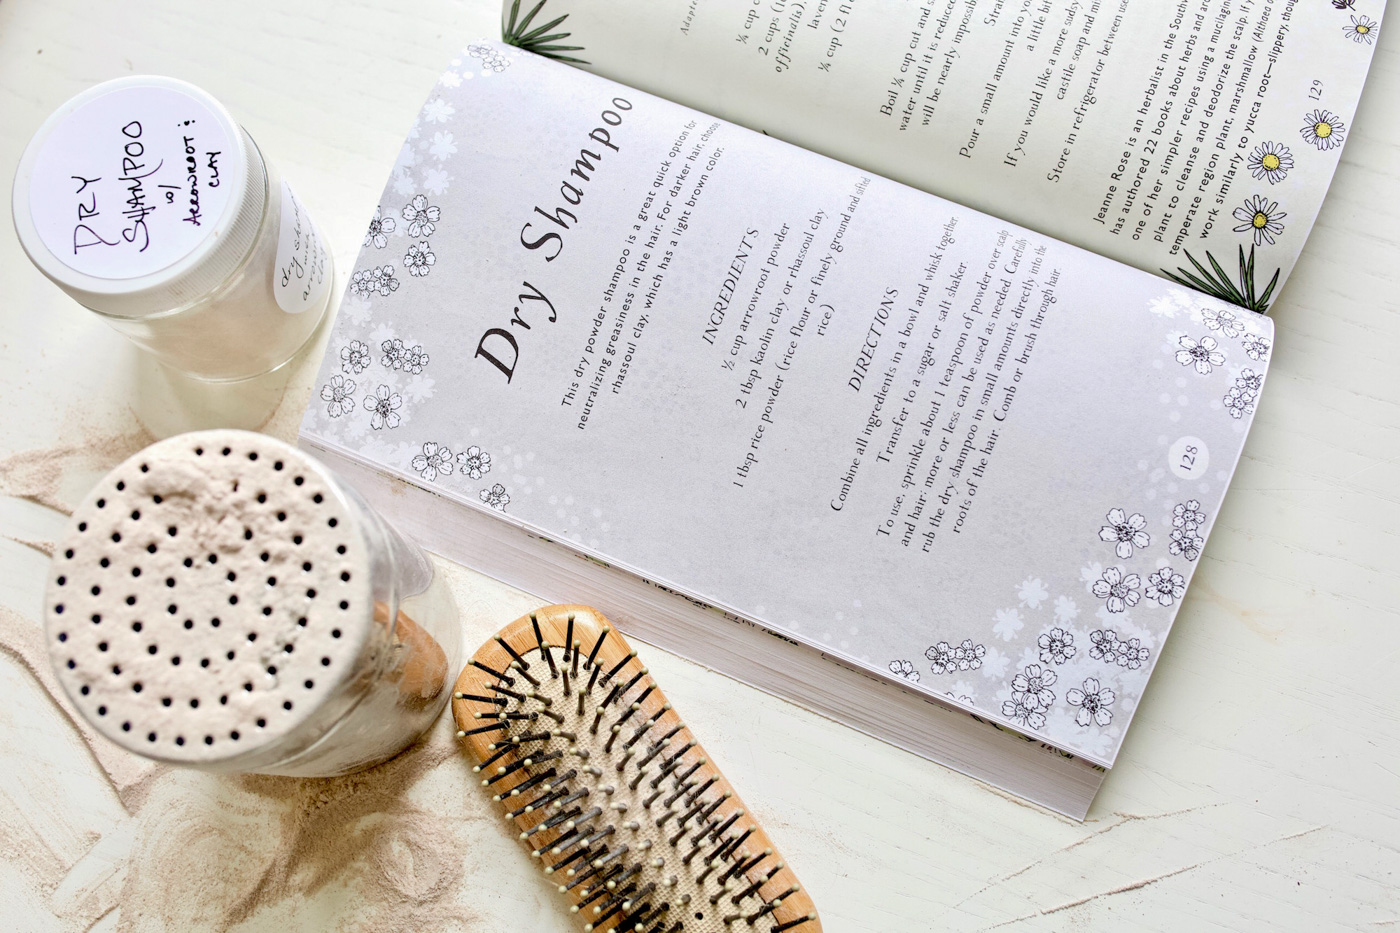 Dry Shampoo Recipe from the Botanical Skin Care Recipe Book